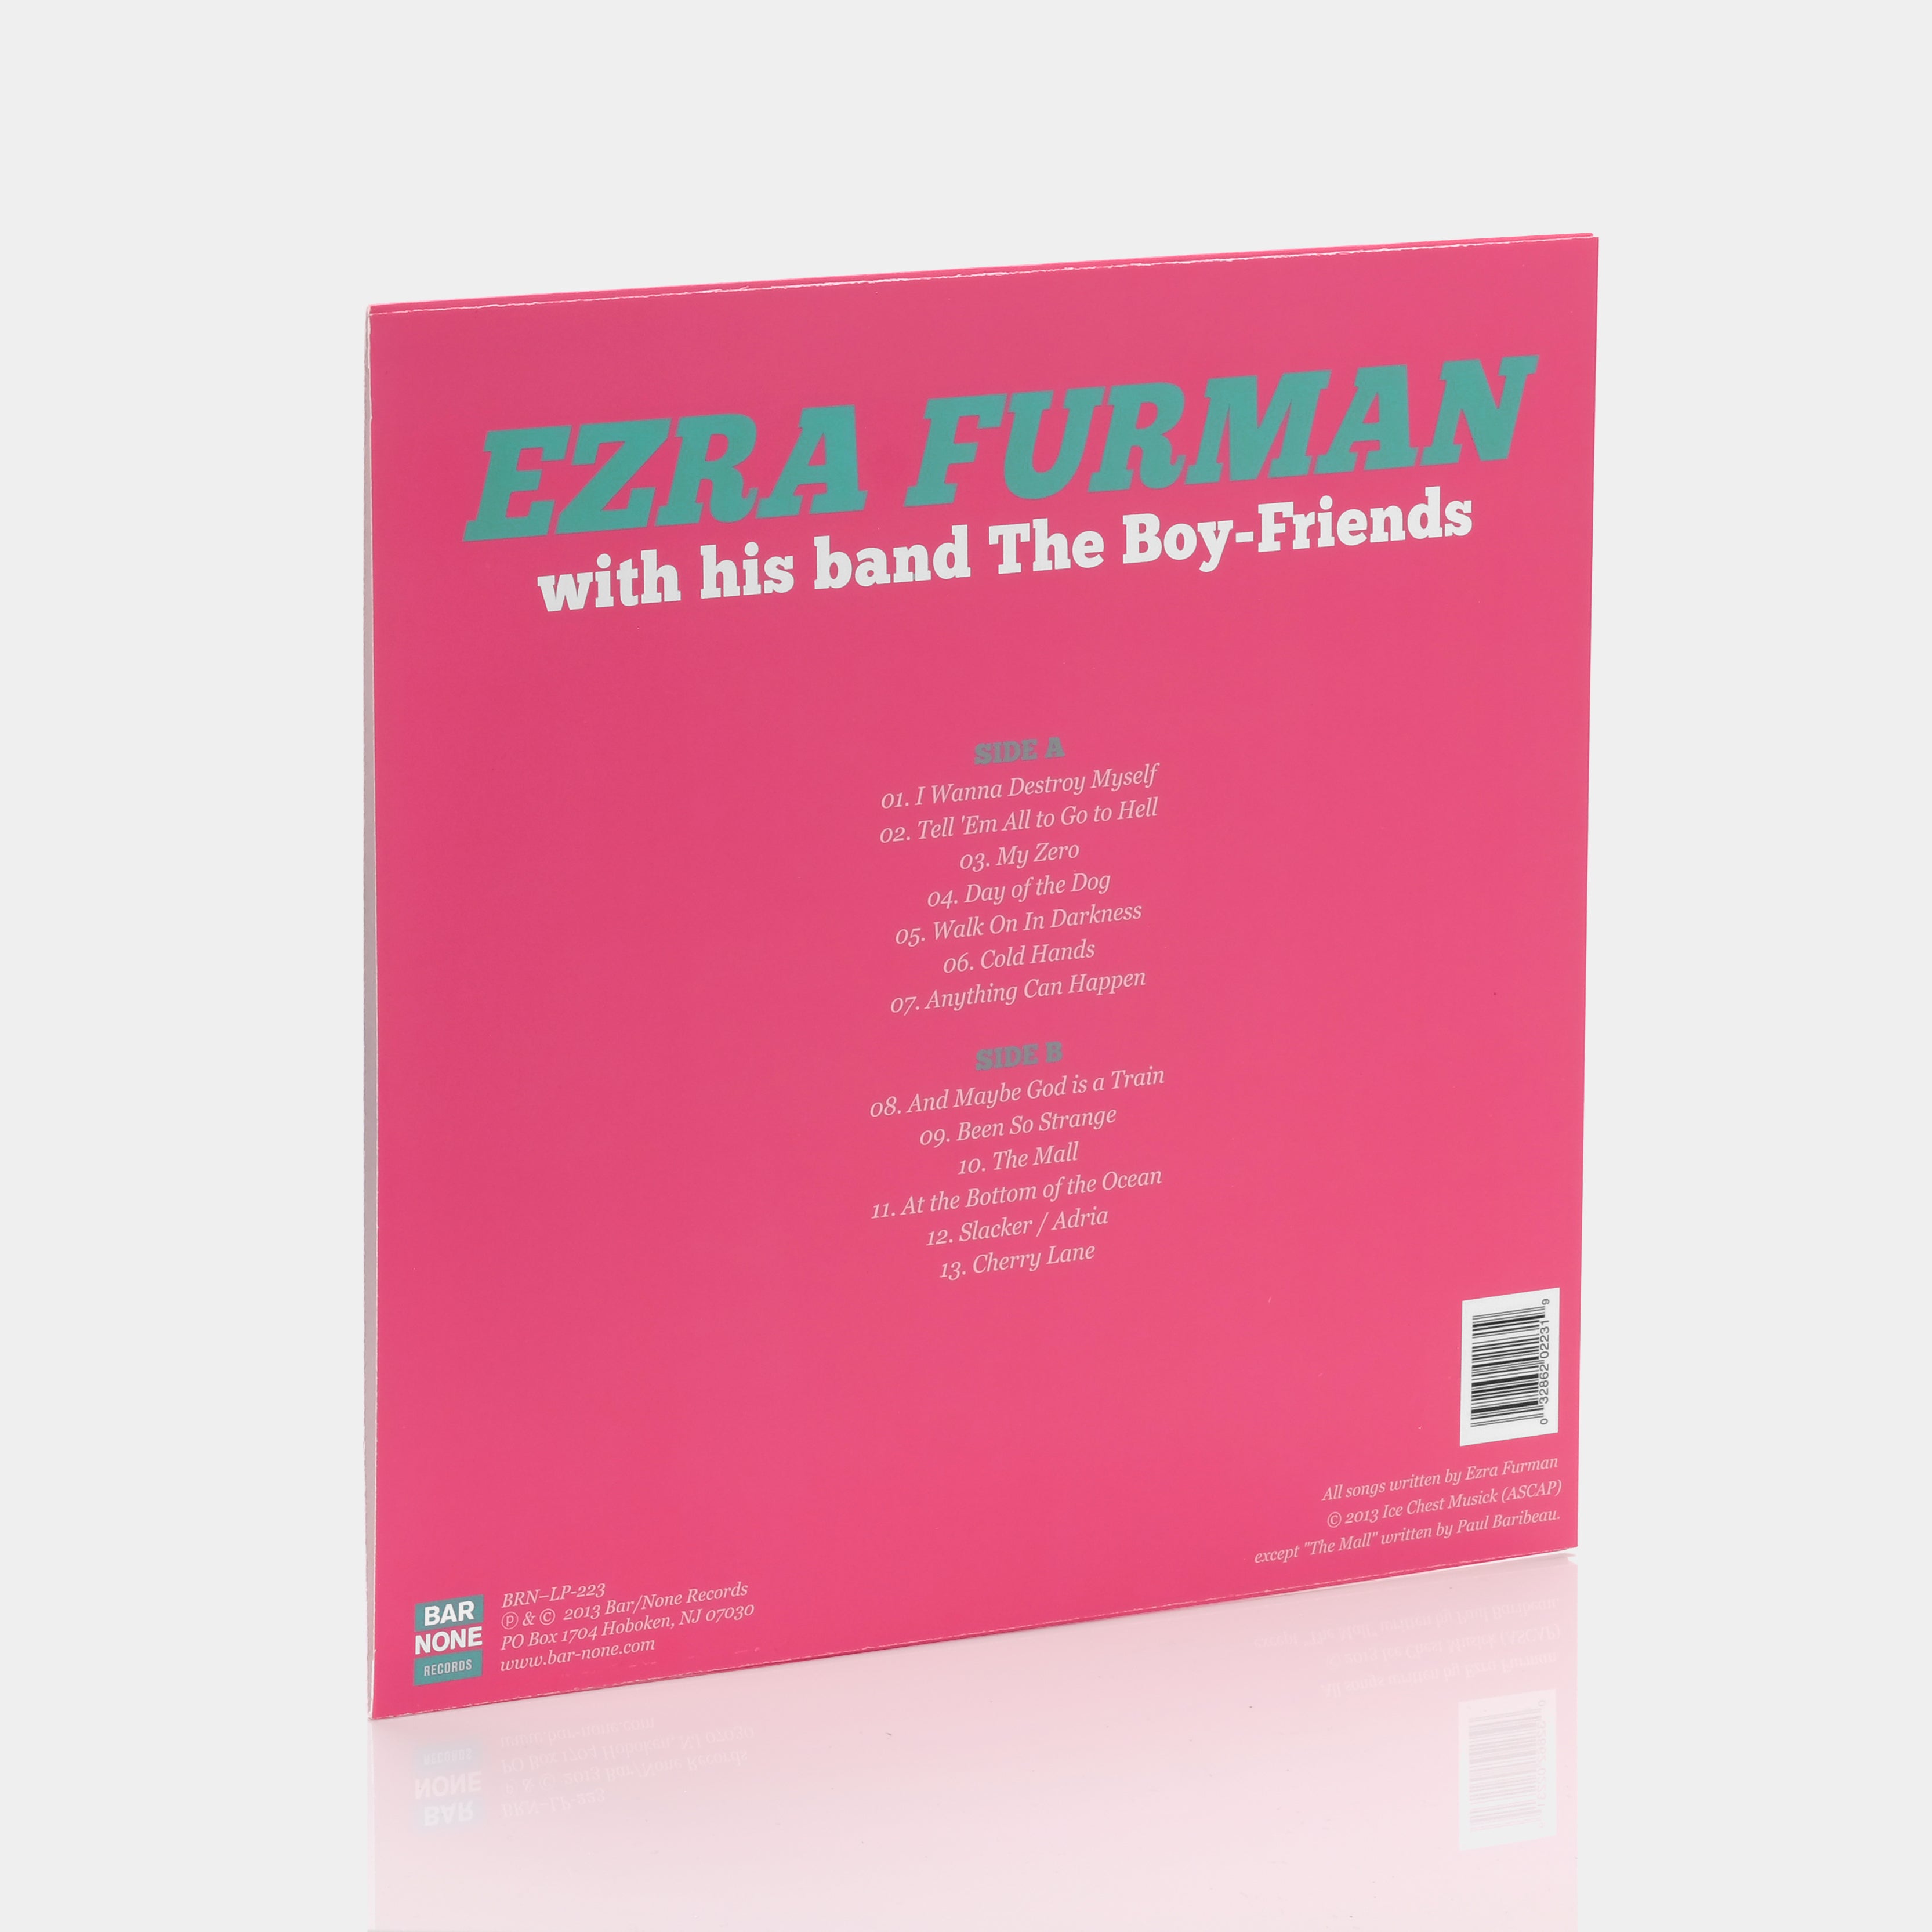 trappe Compulsion pubertet Ezra Furman - Day Of The Dog LP Vinyl Record